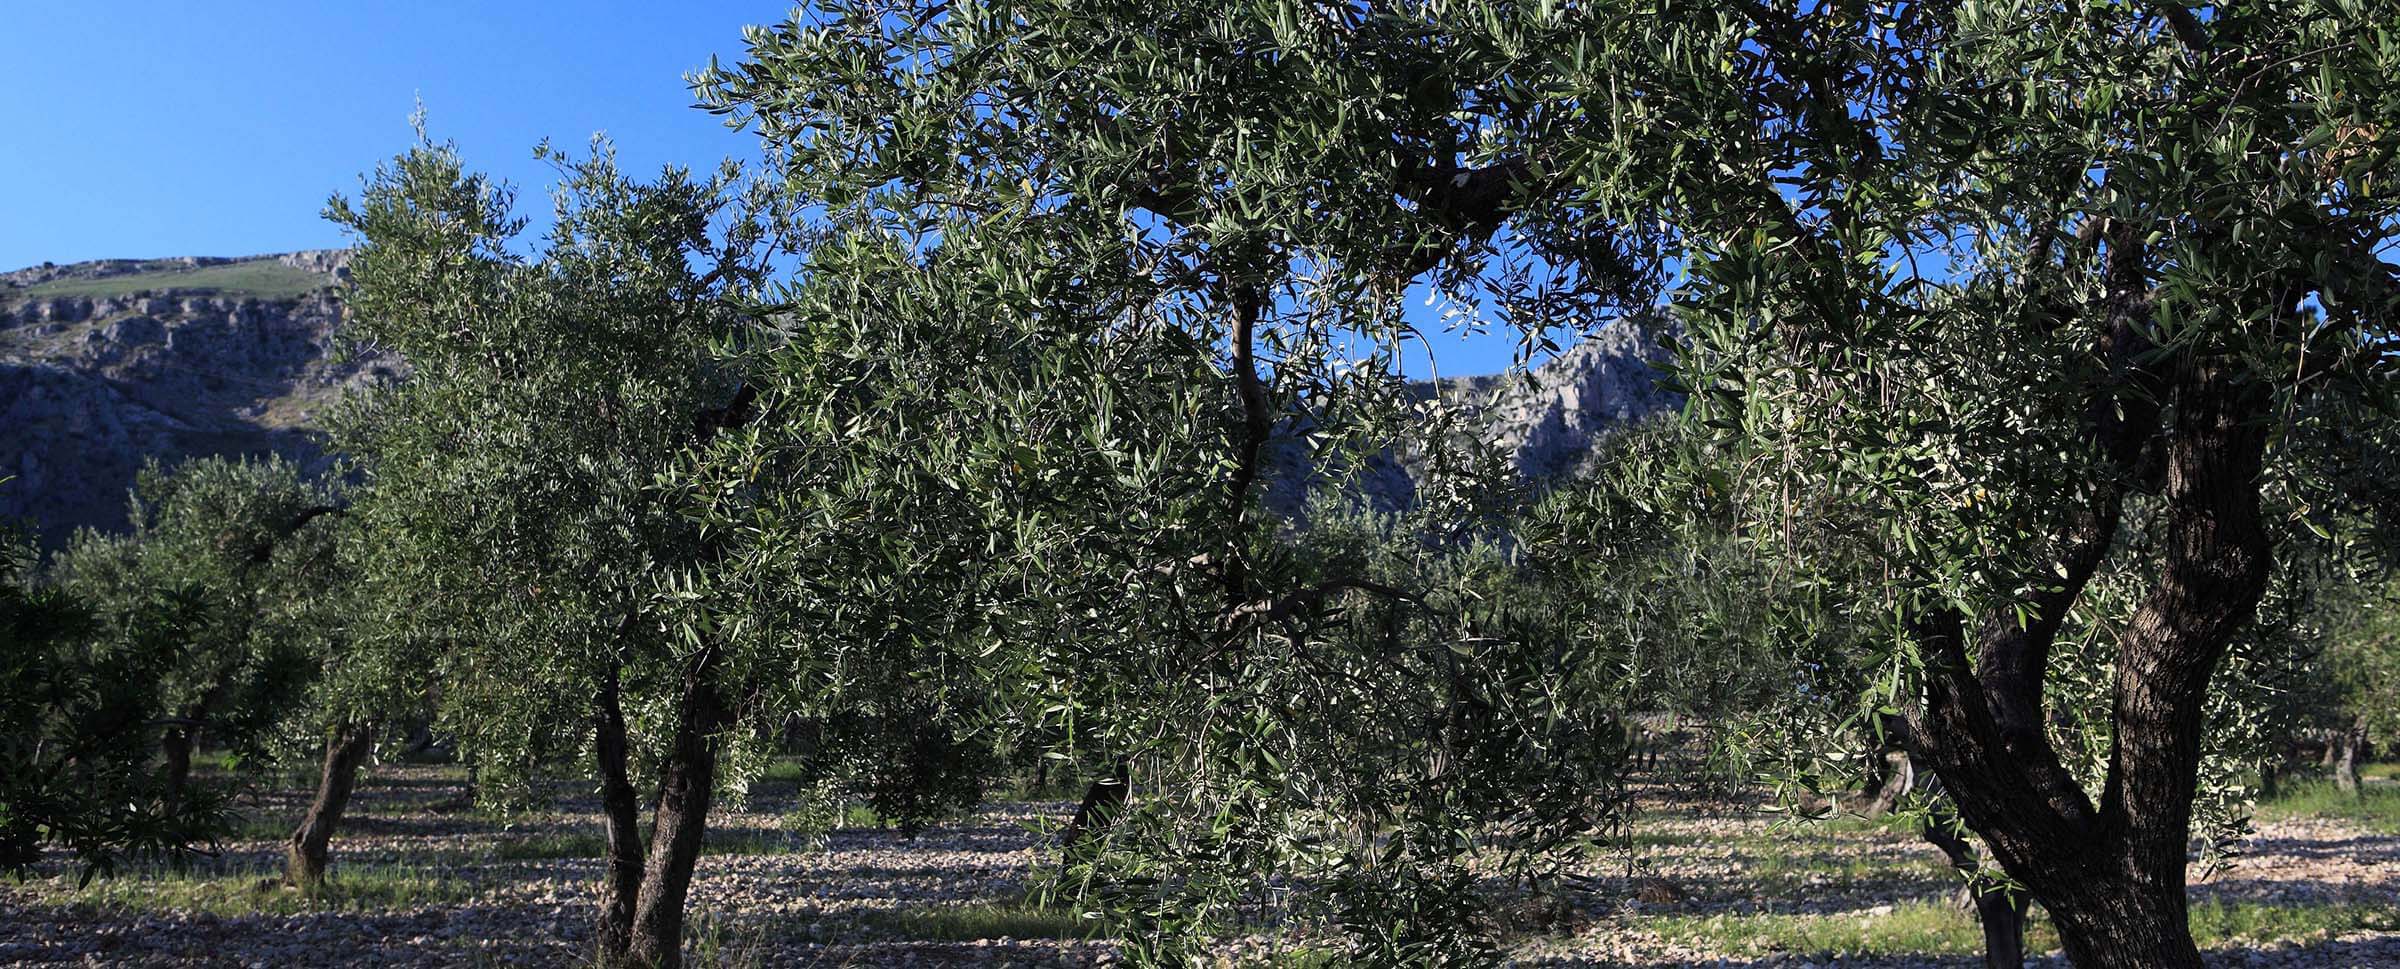 Agribio Trotta - oliveti al tramonto sul Gargano